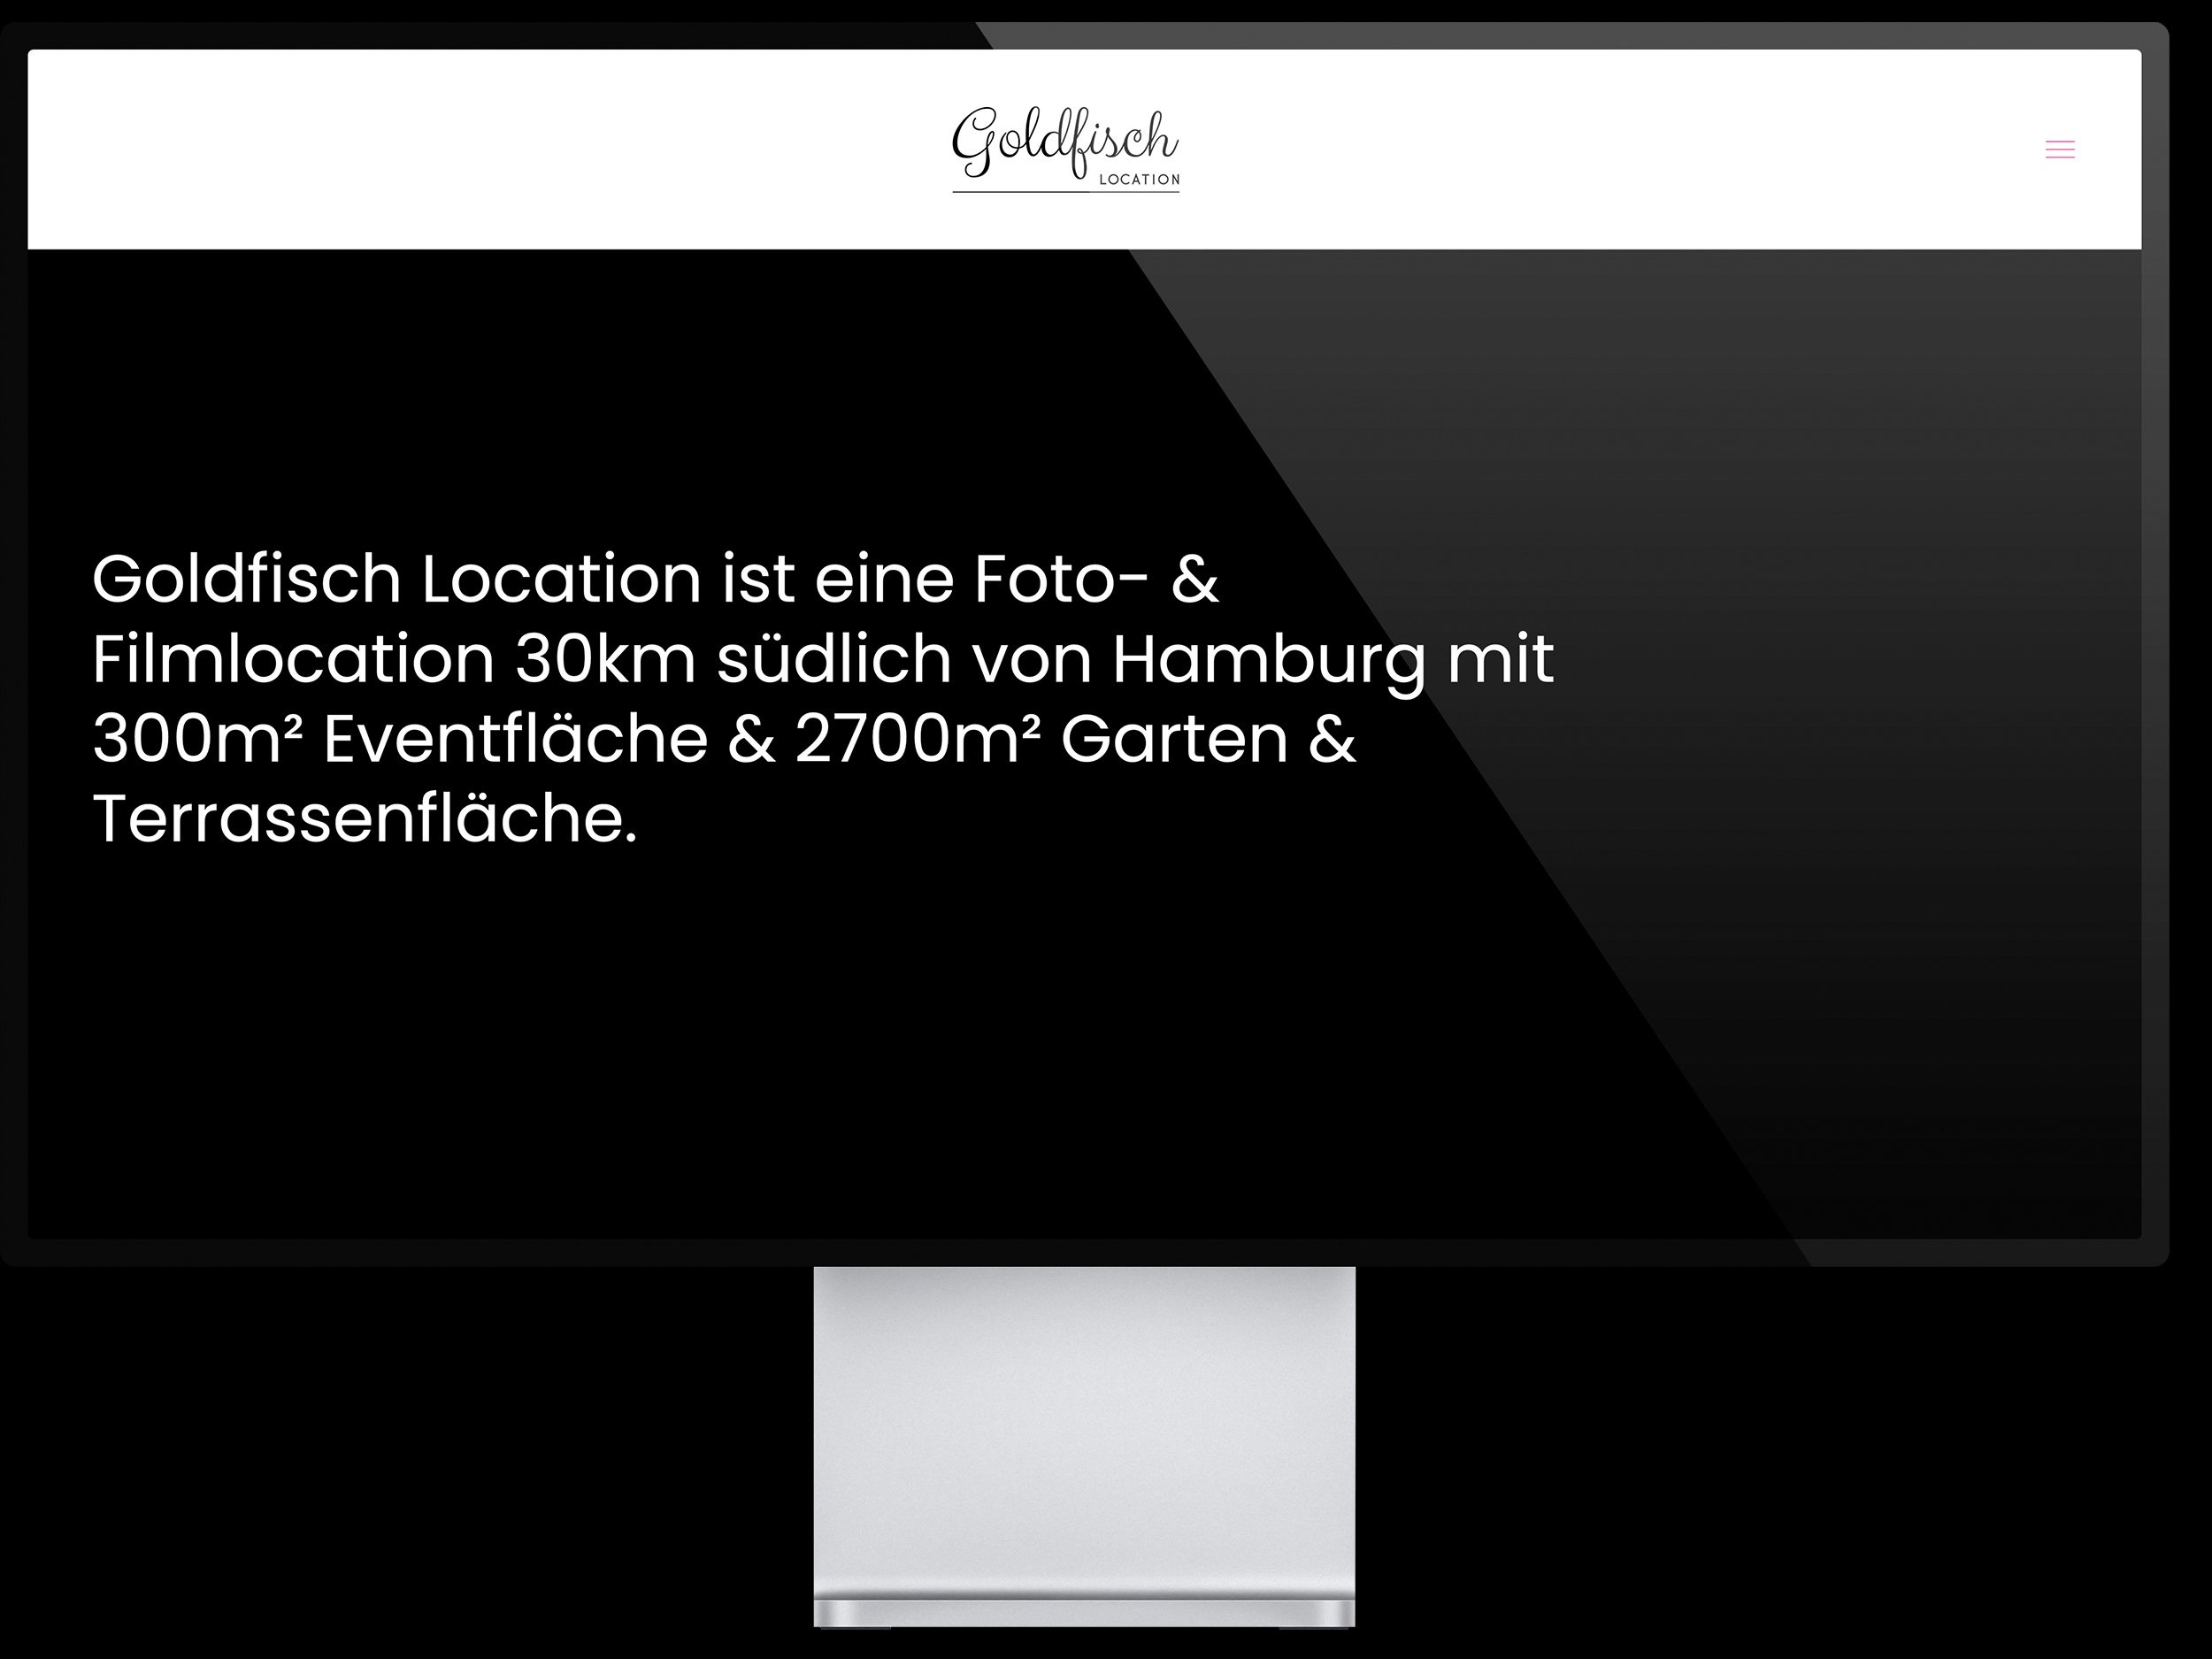 Marc-Perino_Web-Design_Goldfisch-Location_Pro-Display-XDR_001.jpg